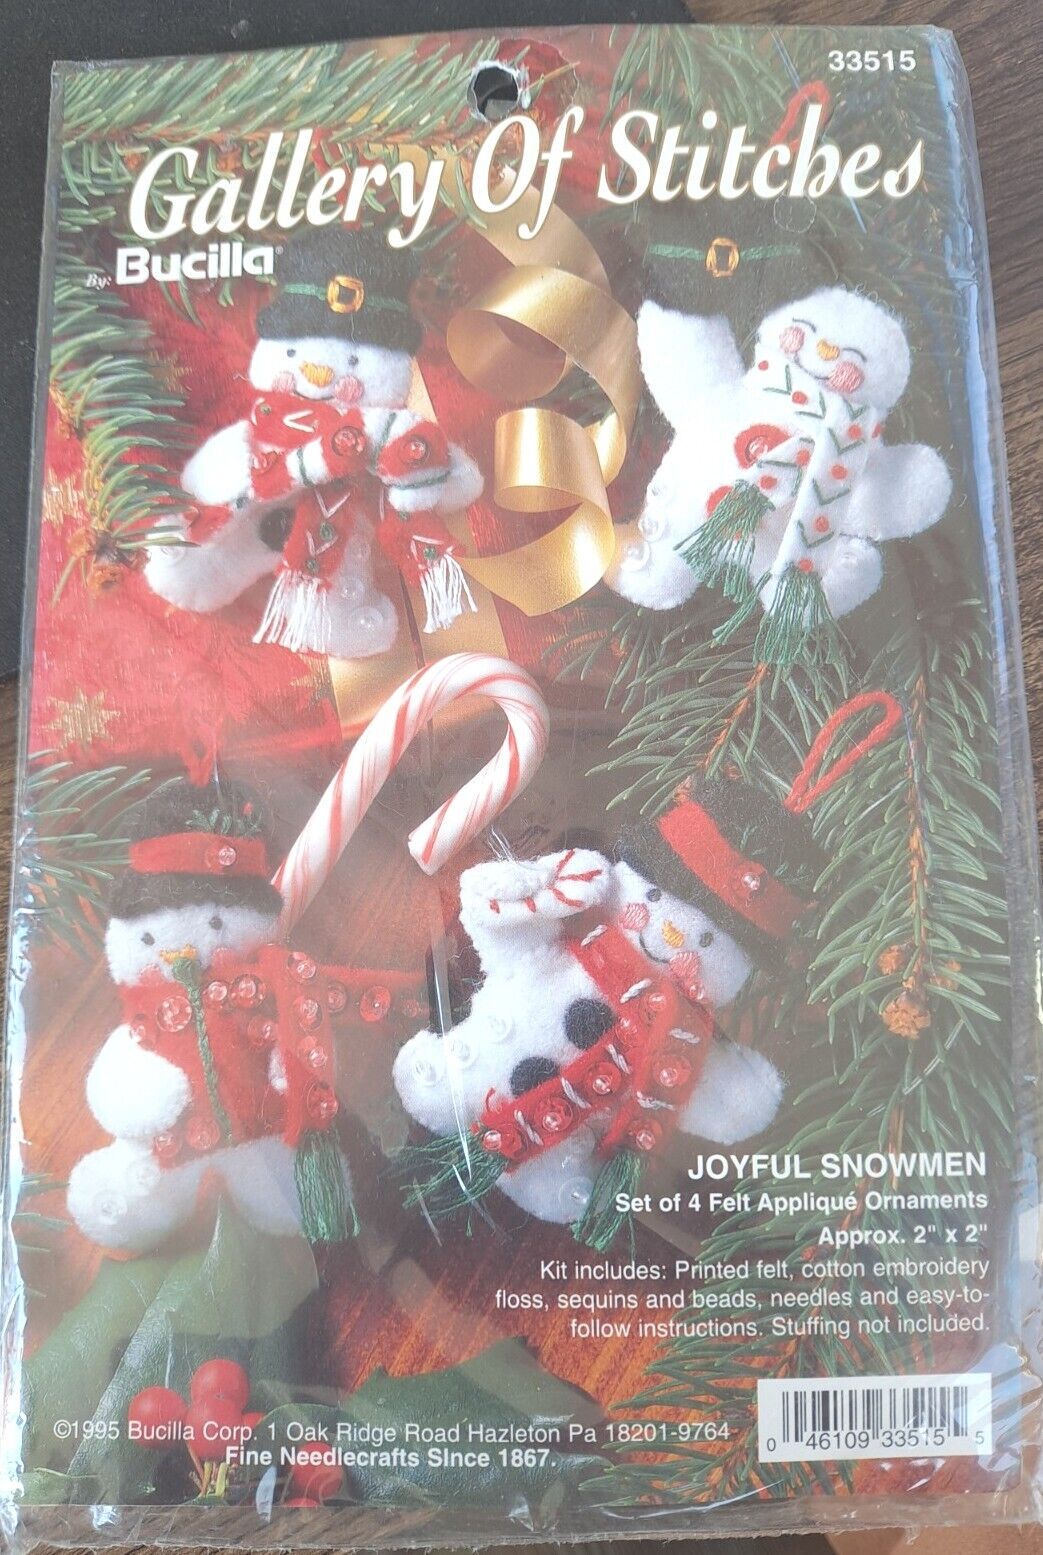 Vtg (1995) New Bucilla Gallery Of Stitches Felt Ornament Kit "joyful Snowmen"